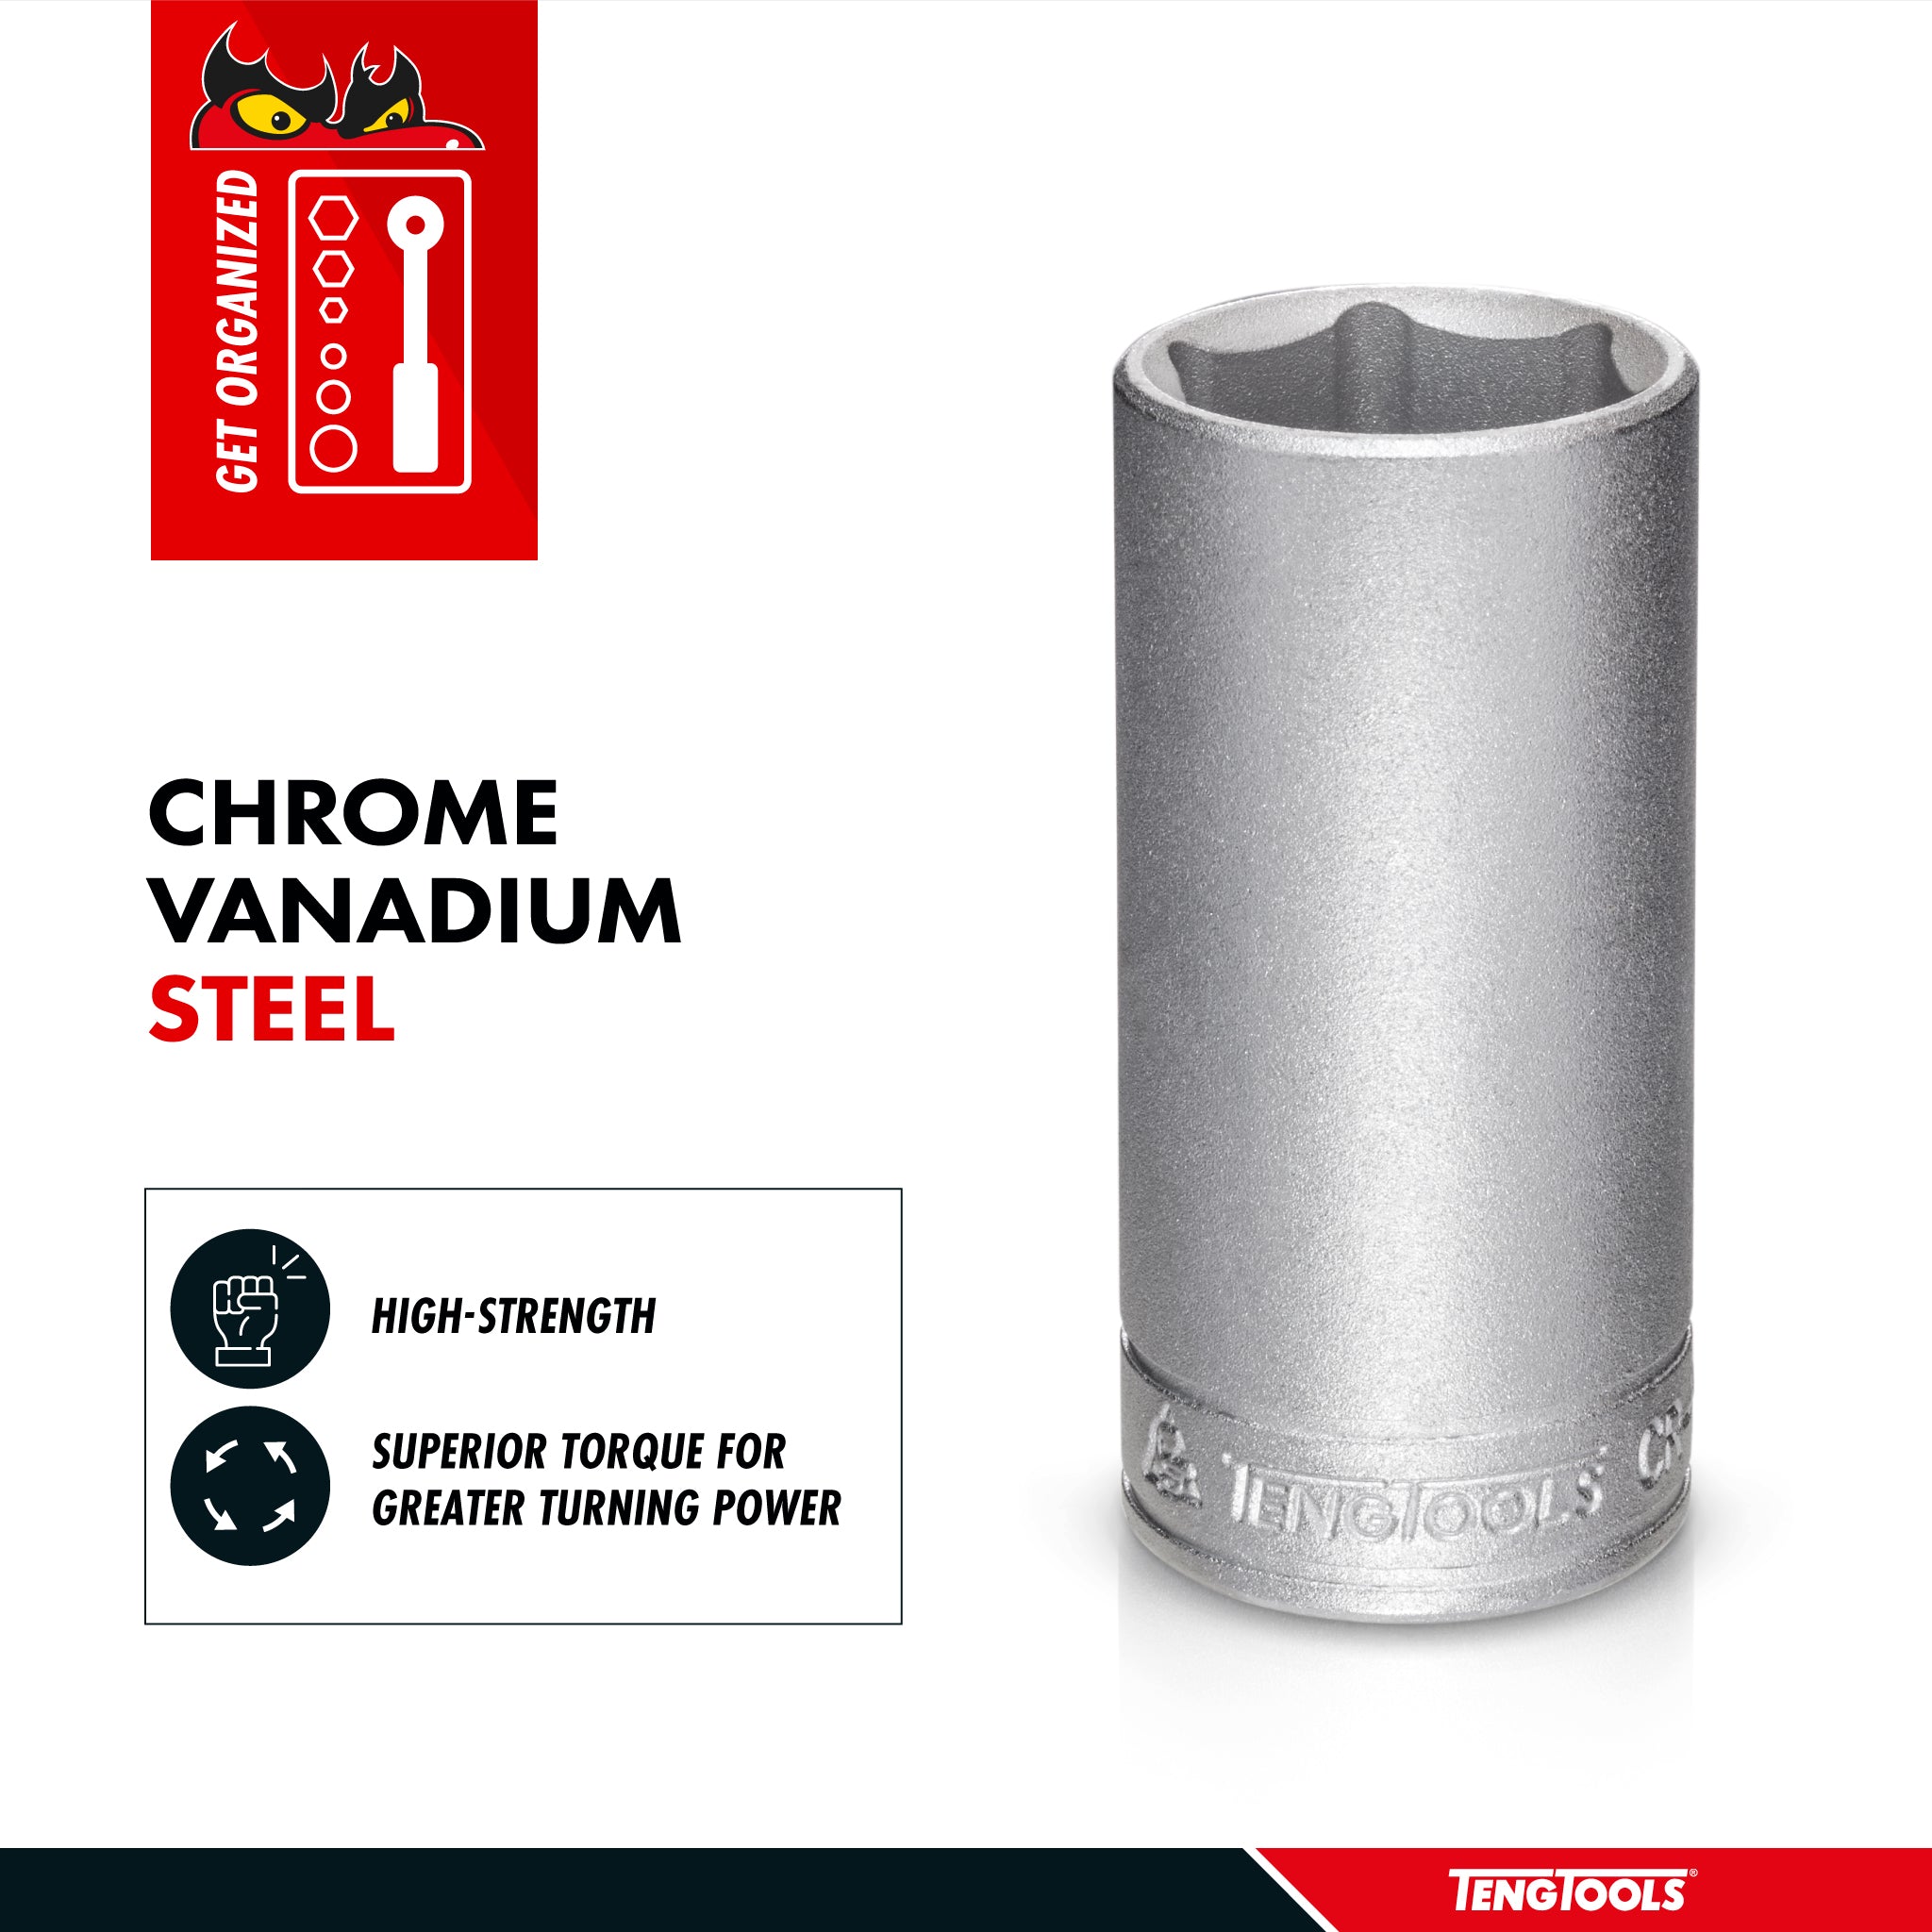 Teng Tools 1/4 Inch Drive 6 Point Metric Deep Chrome Vanadium Sockets - 9mm